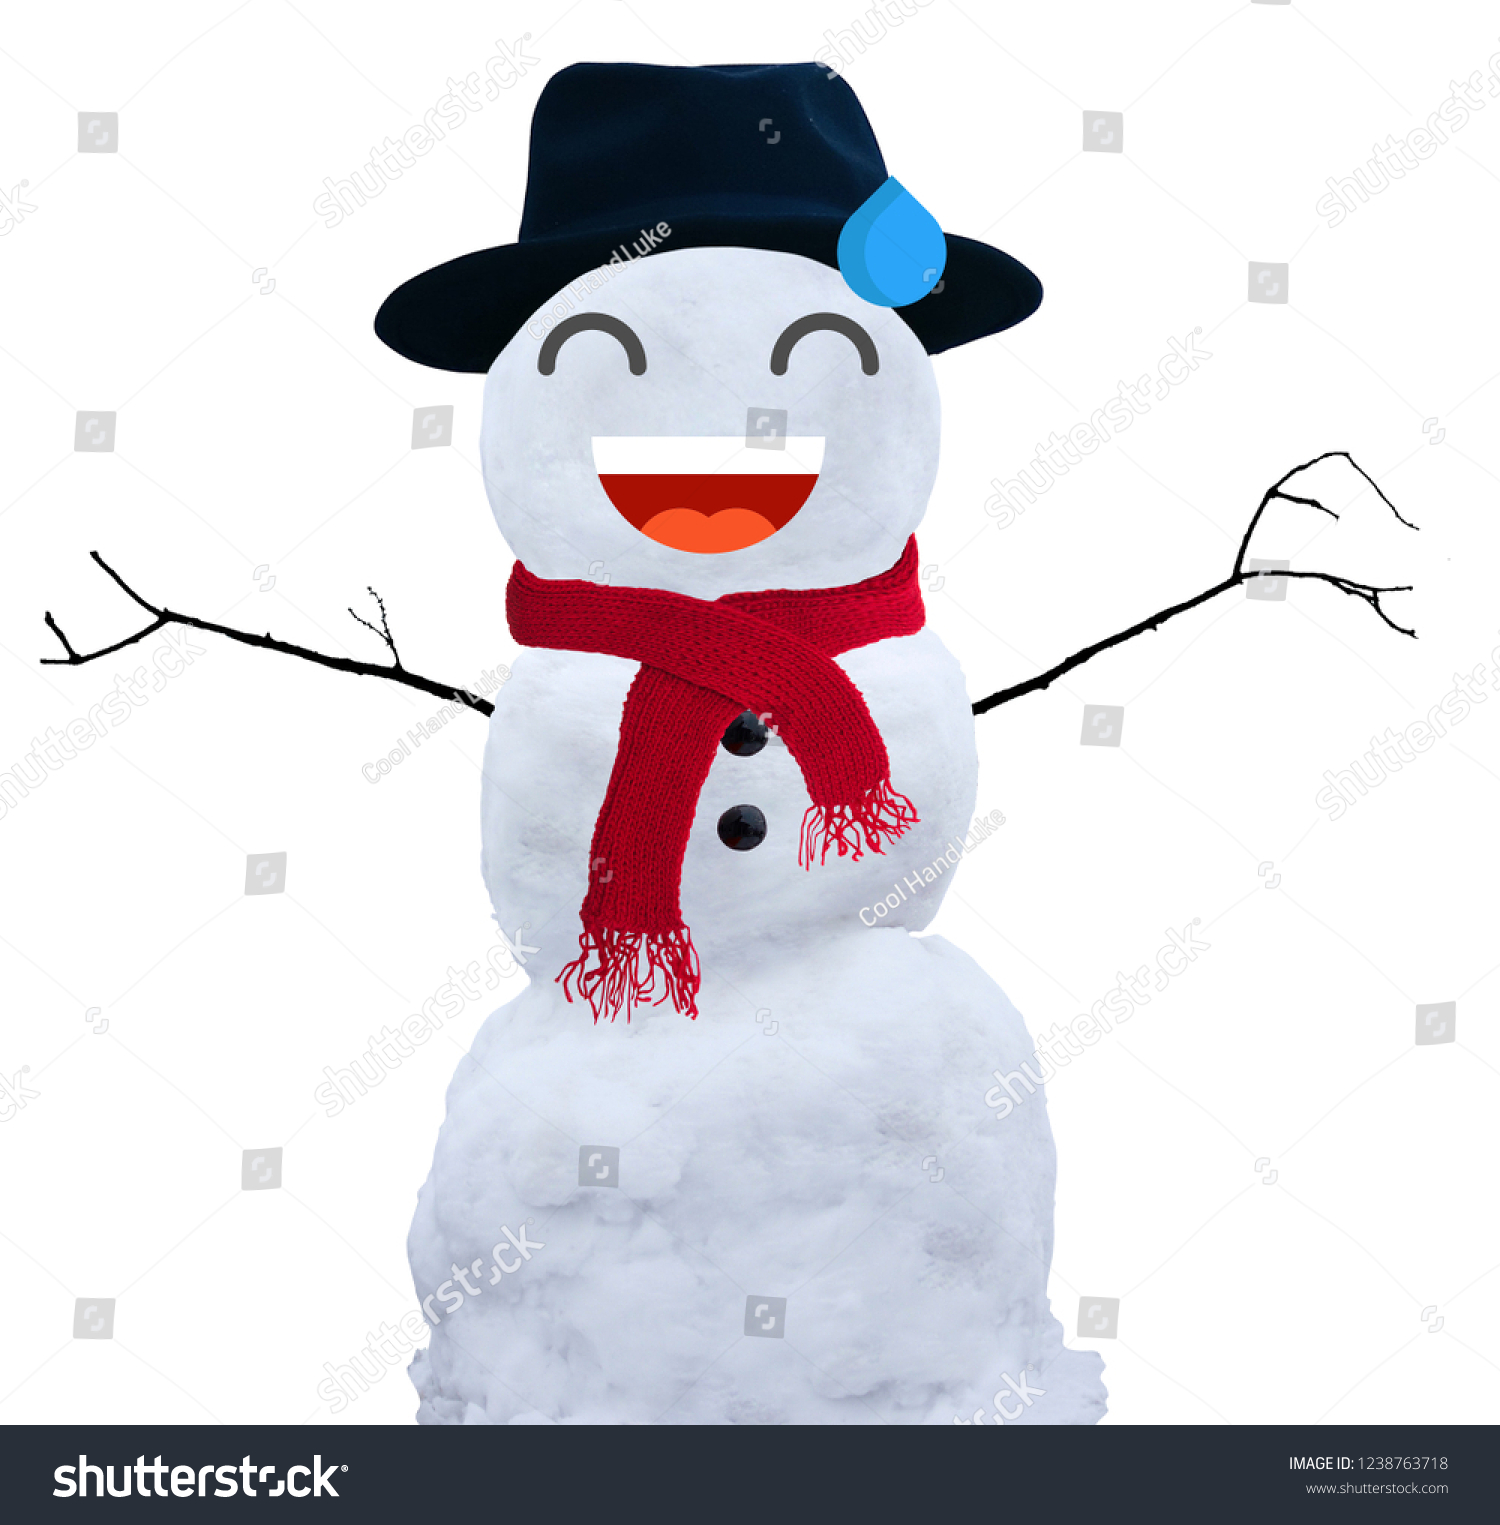 Cartoon Snowman Emoji Christmas Card Illustration. Set of Emoticon. Vector Isolated Xmas Snowman Illustration on White. #1238763718